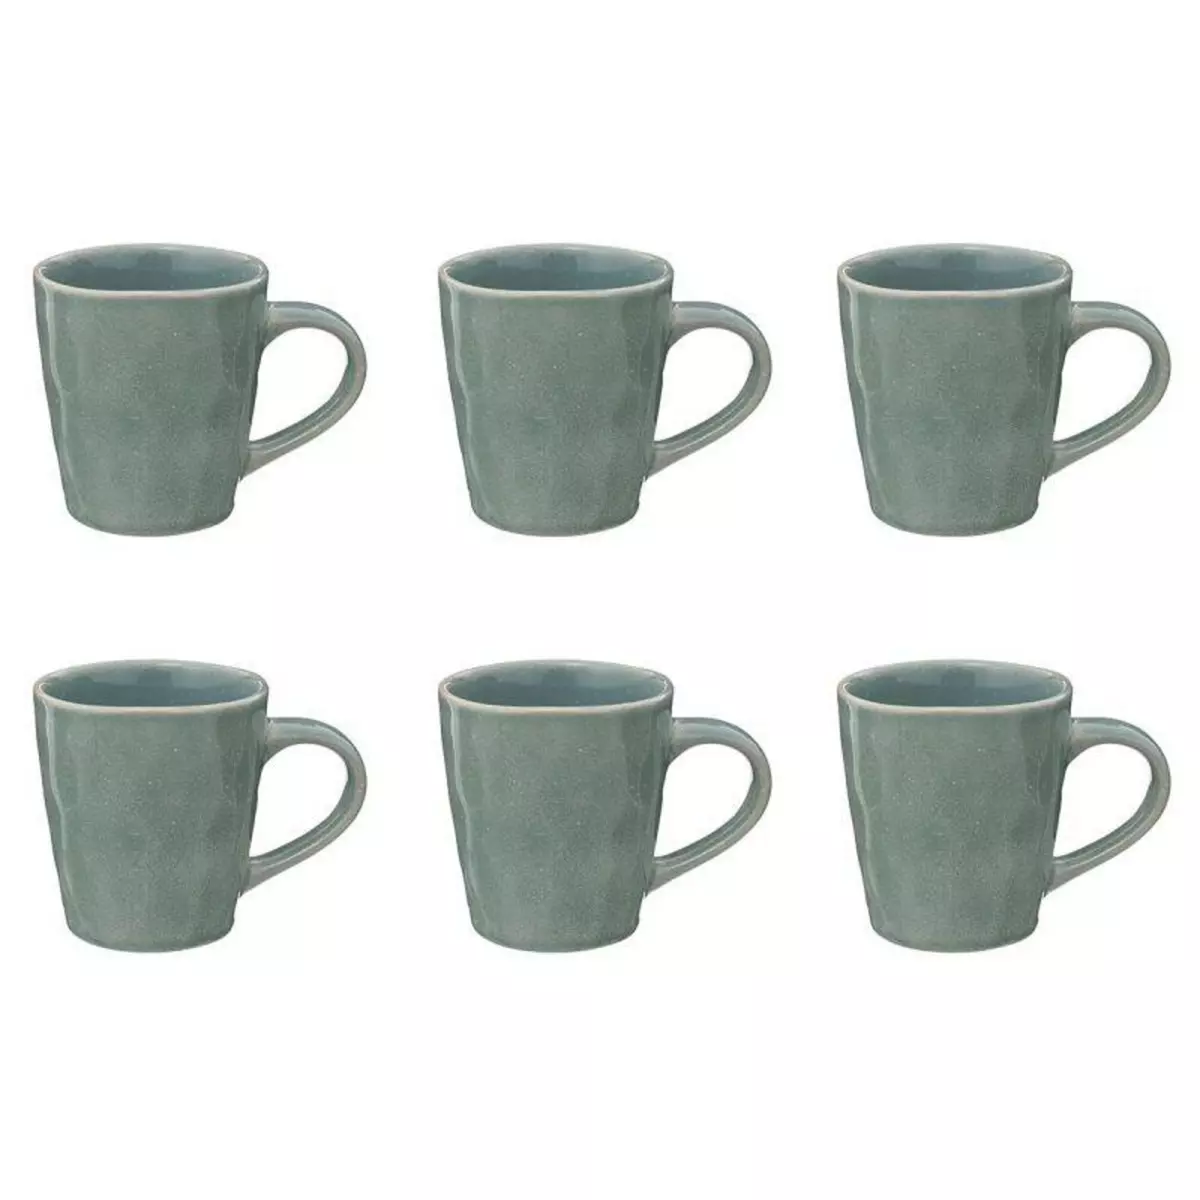  Lot de 6 Mugs Design  Zoé  35cl Vert